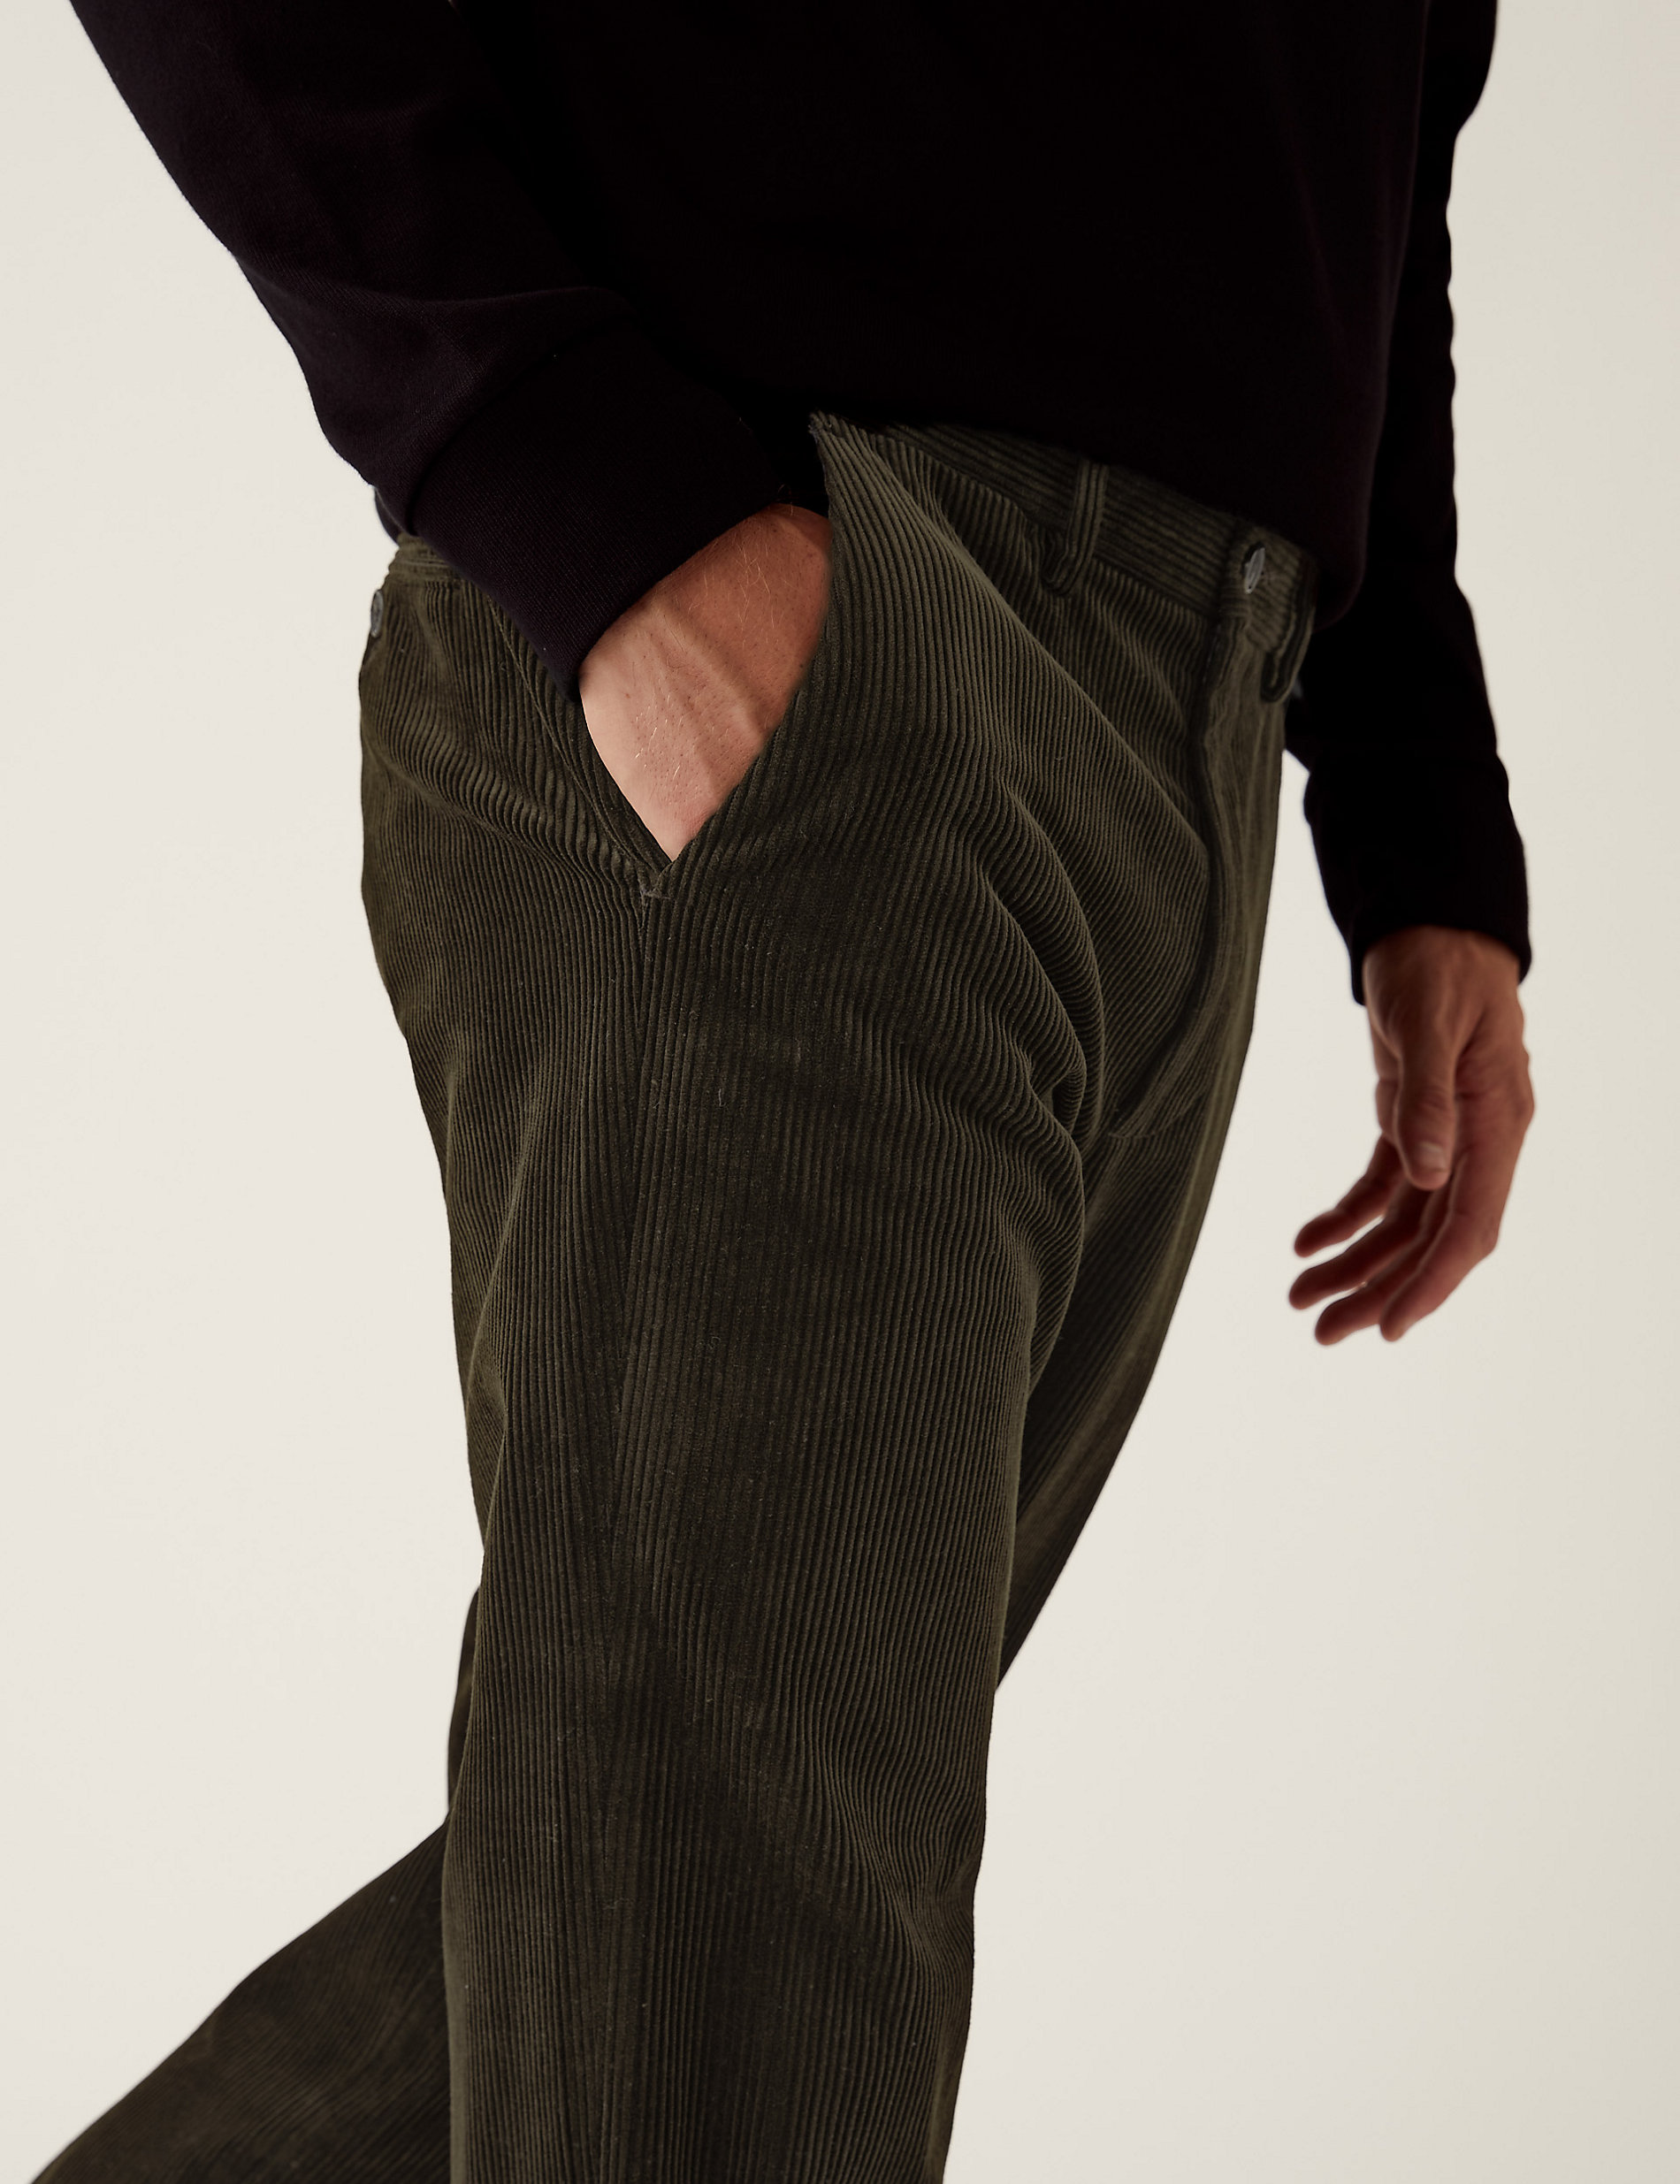 Regular Fit Luxury Corduroy Stretch Trouser